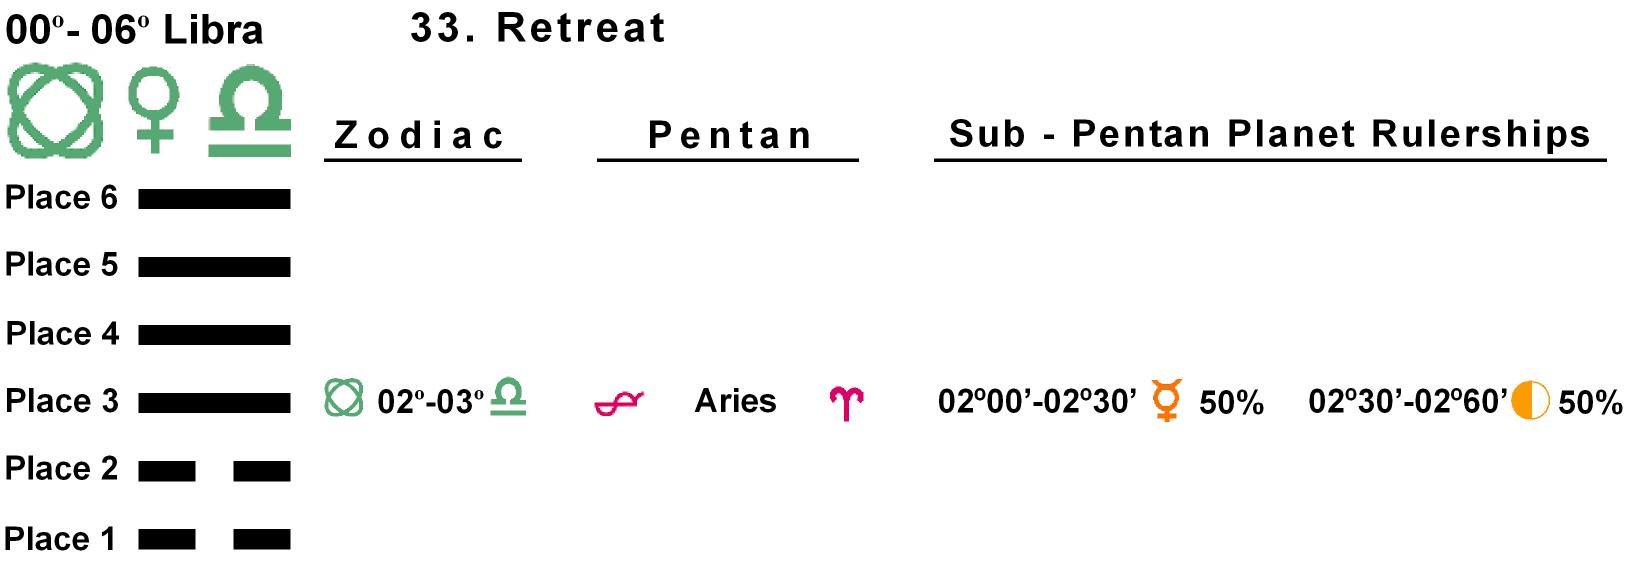 Pent-lines-07LI 02-03 Hx-33 Retreat